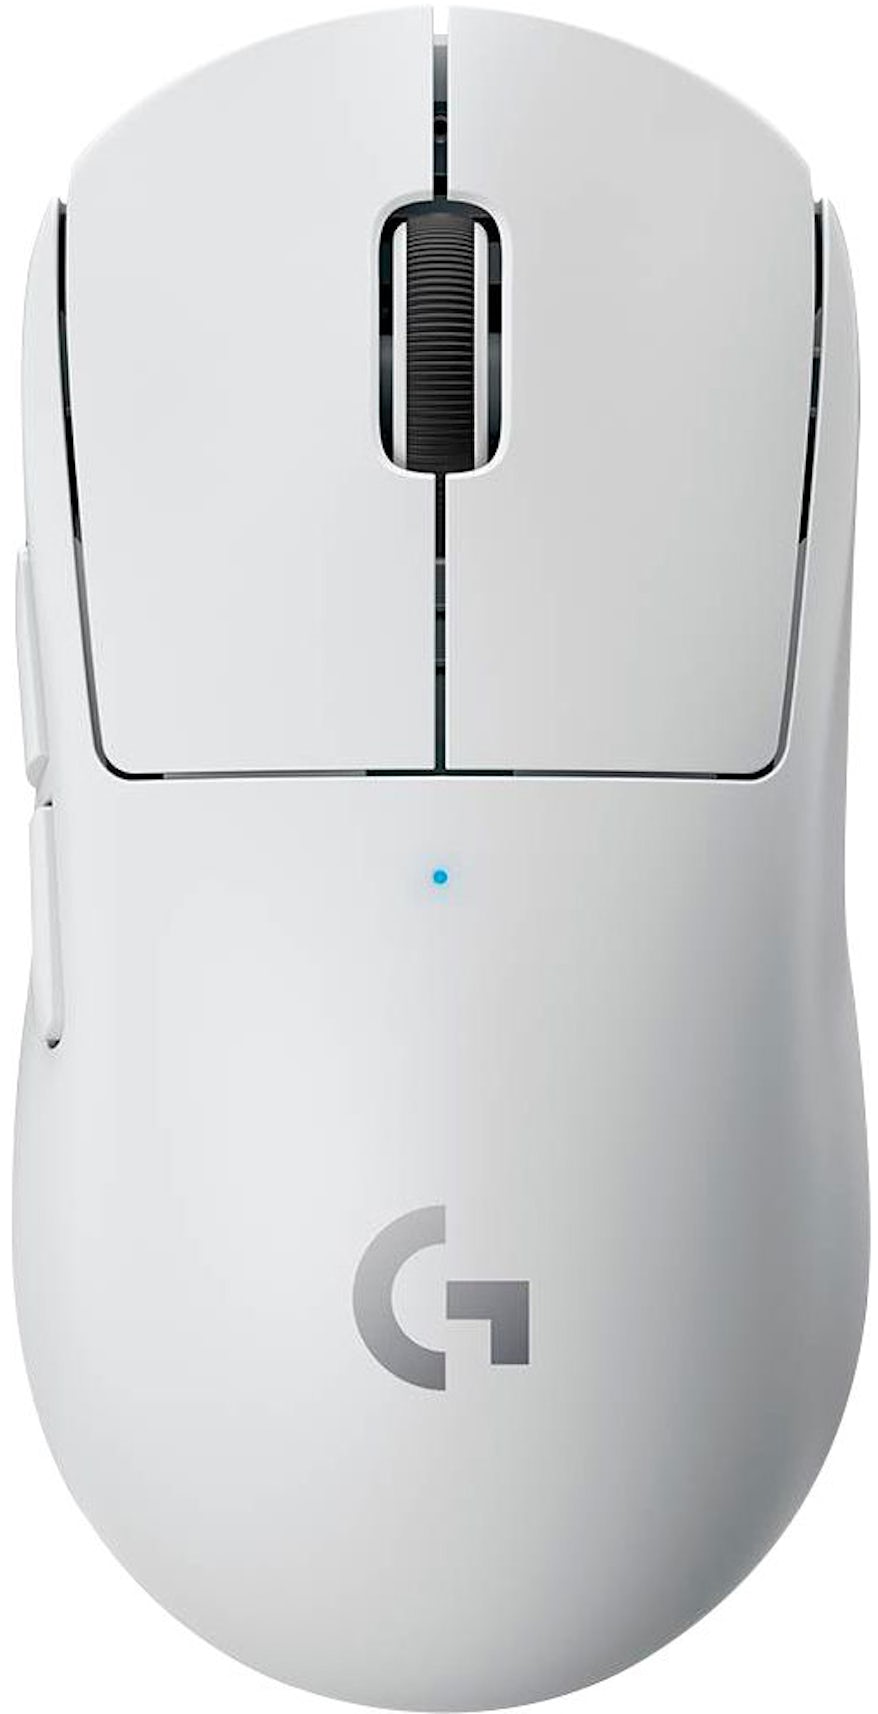 Logitech G Pro Wireless Gaming Mouse (Noir)